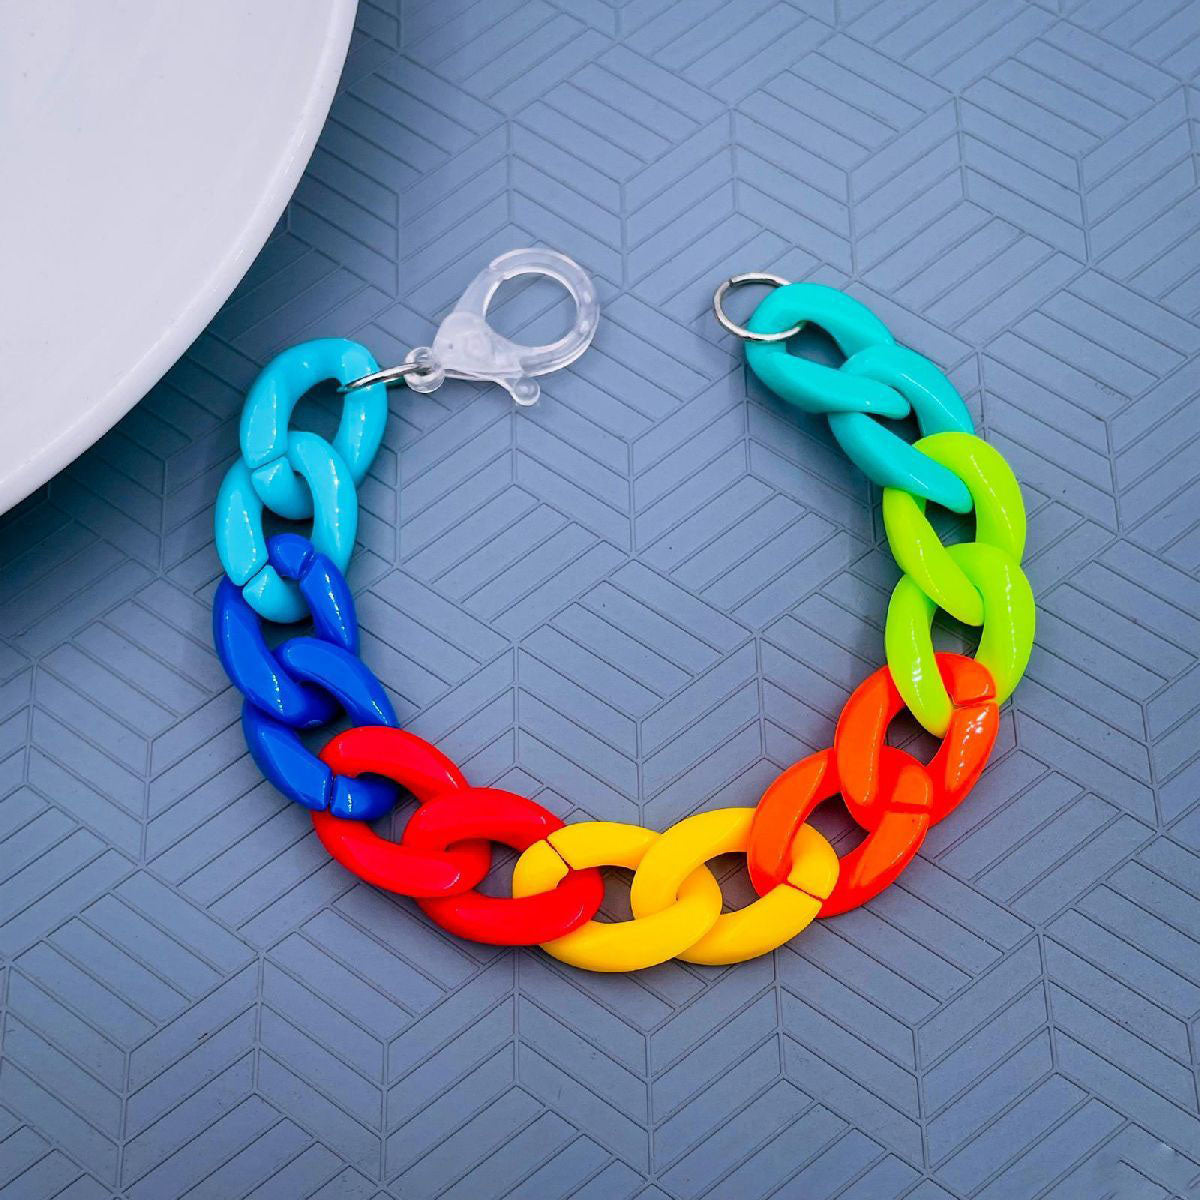 Best bracelets to buy for girls  Business Insider India